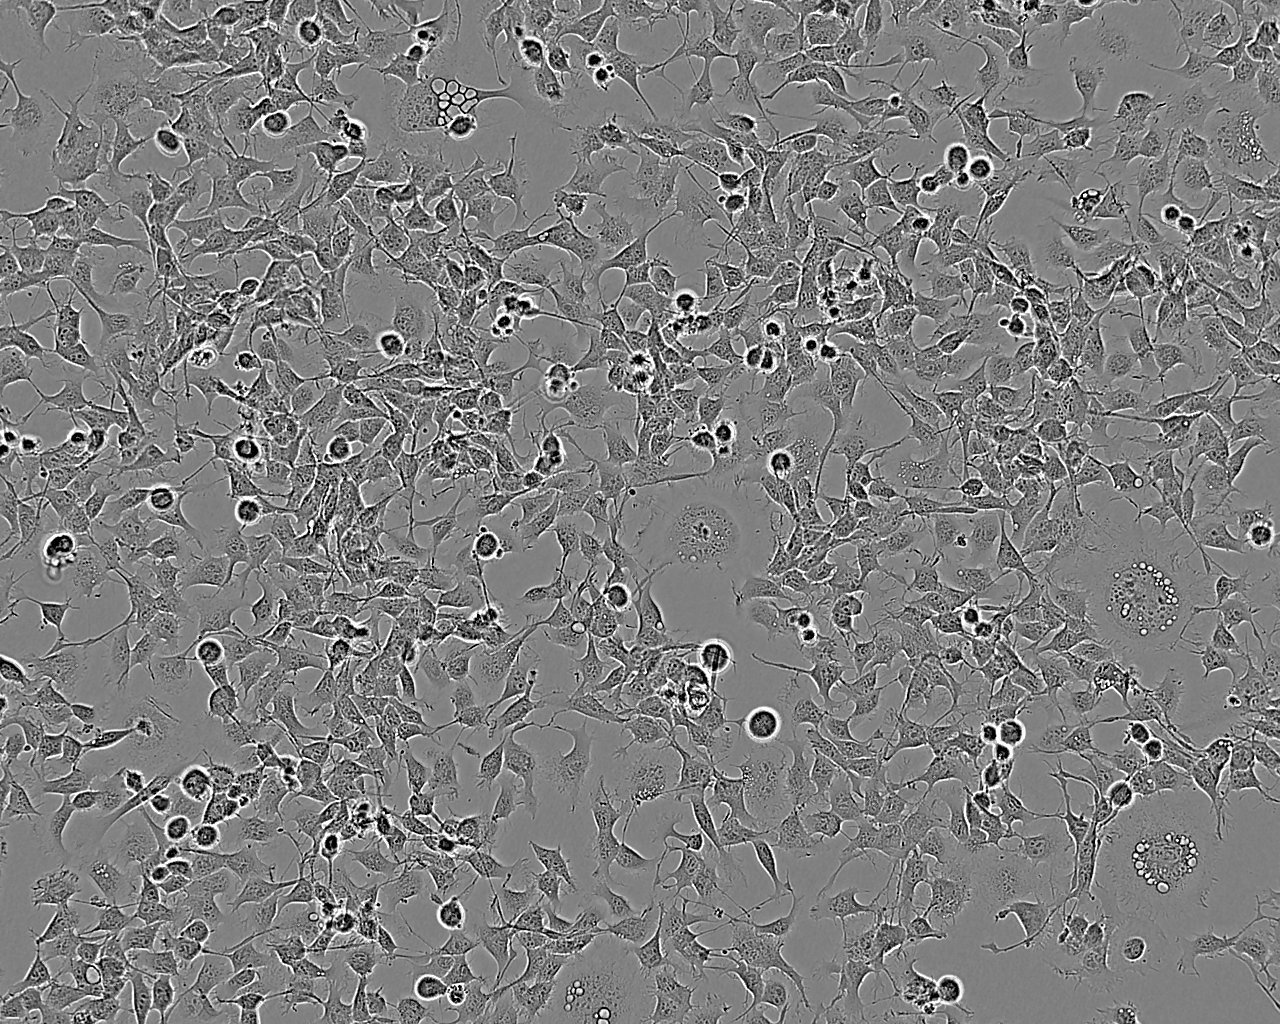 PANC-1细胞：人胰腺癌细胞系